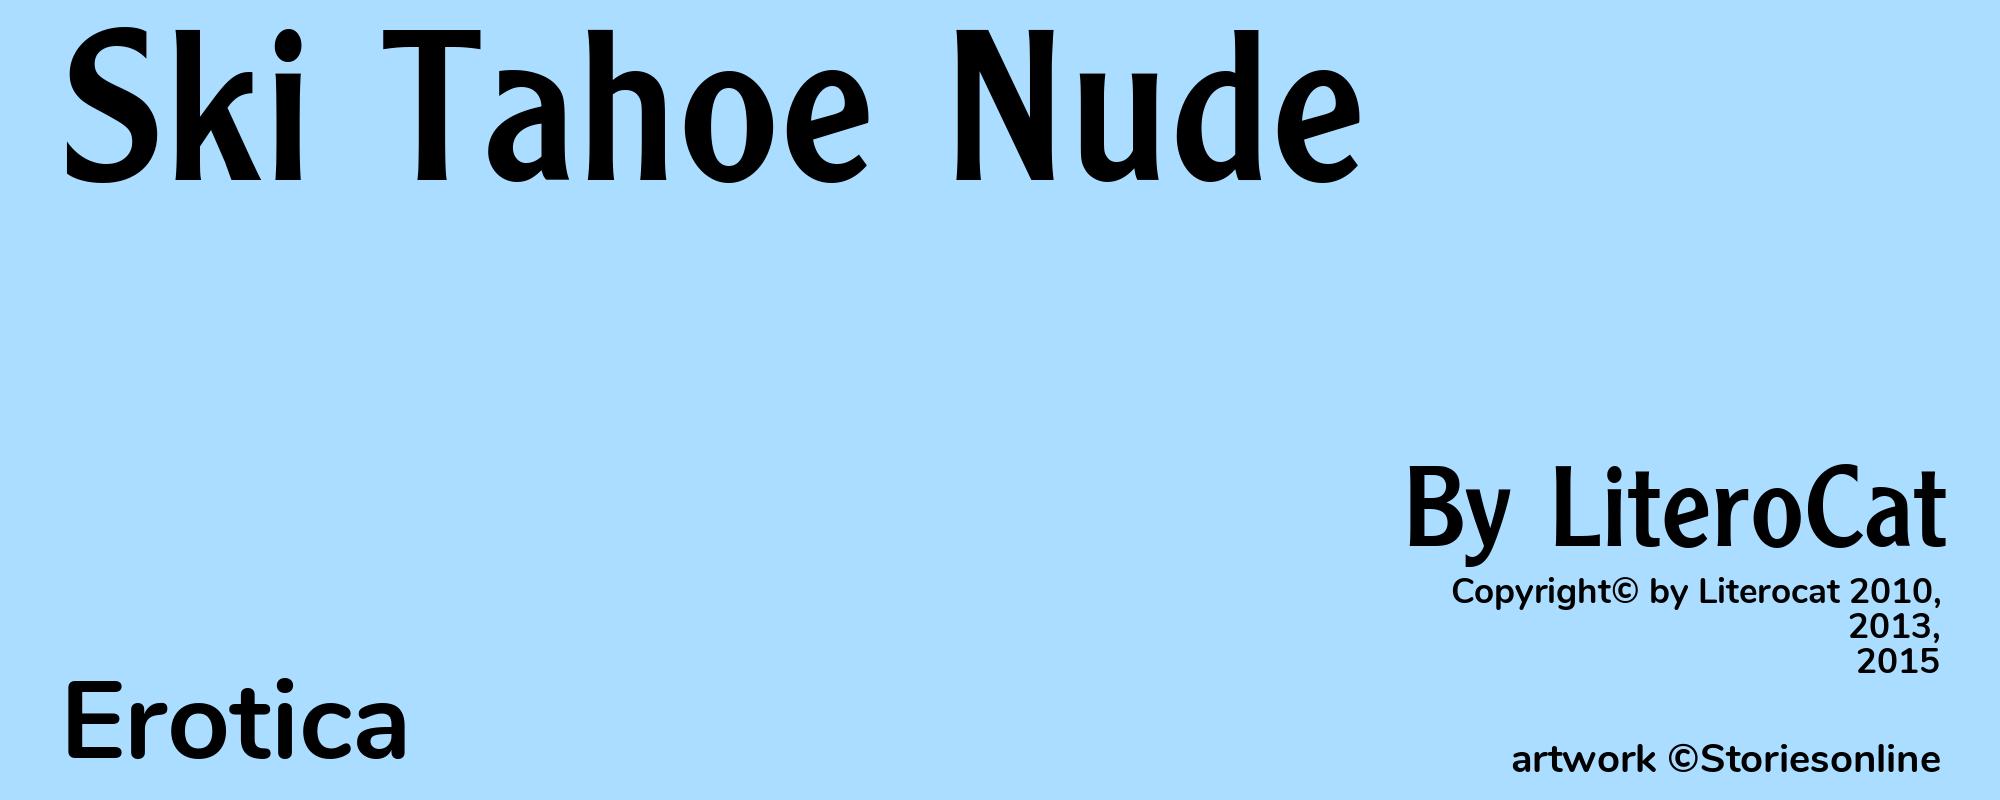 Ski Tahoe Nude - Cover